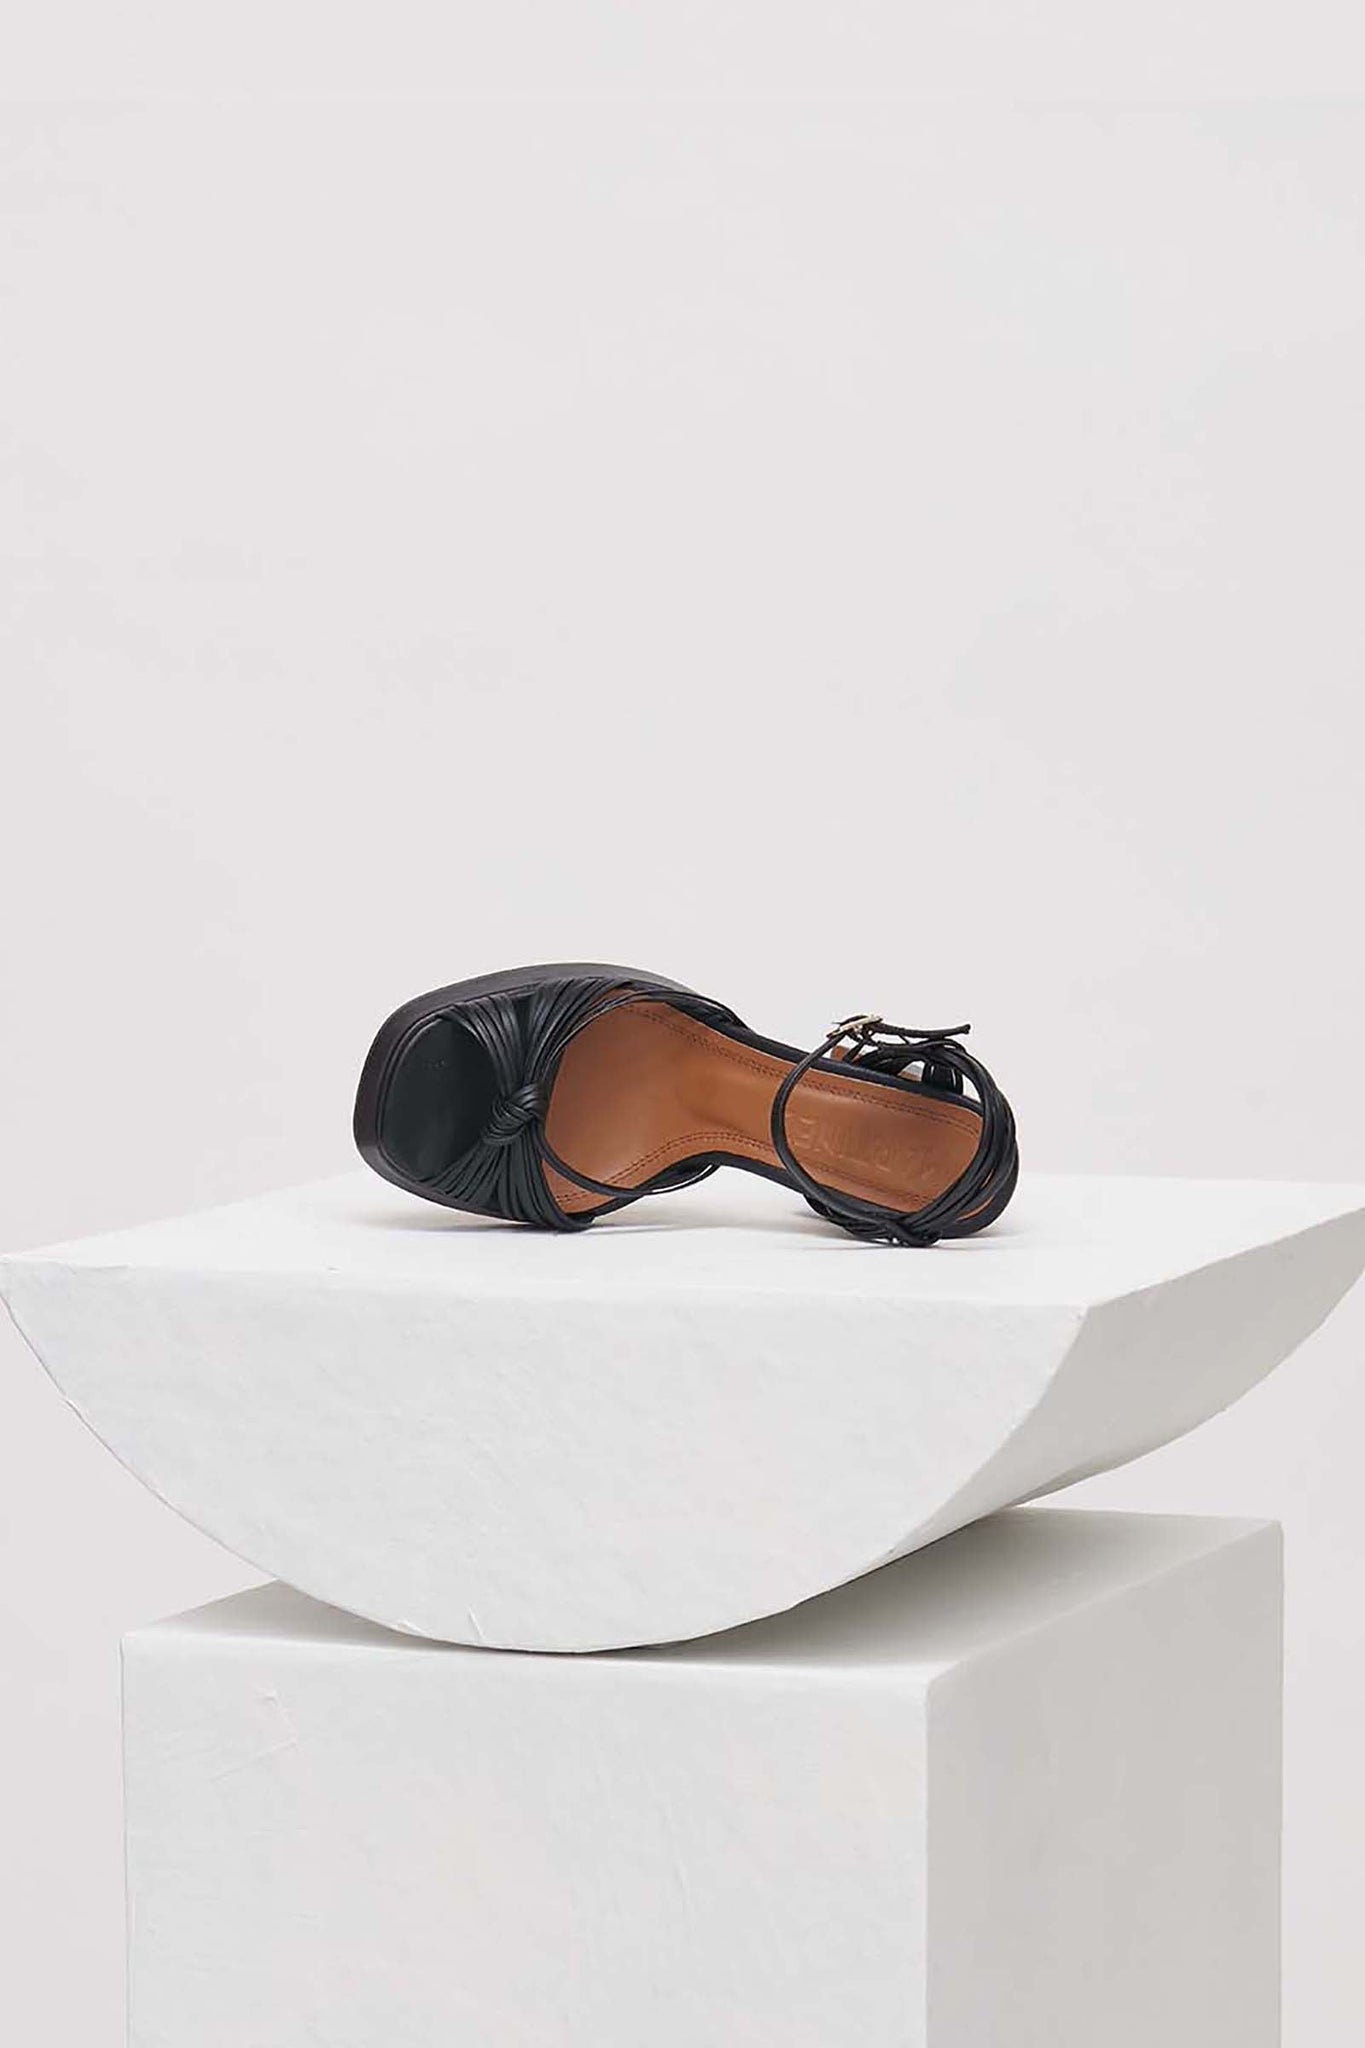 Souliers Martinez Shoes SPRINGS - Black Leather Platform Sandals 